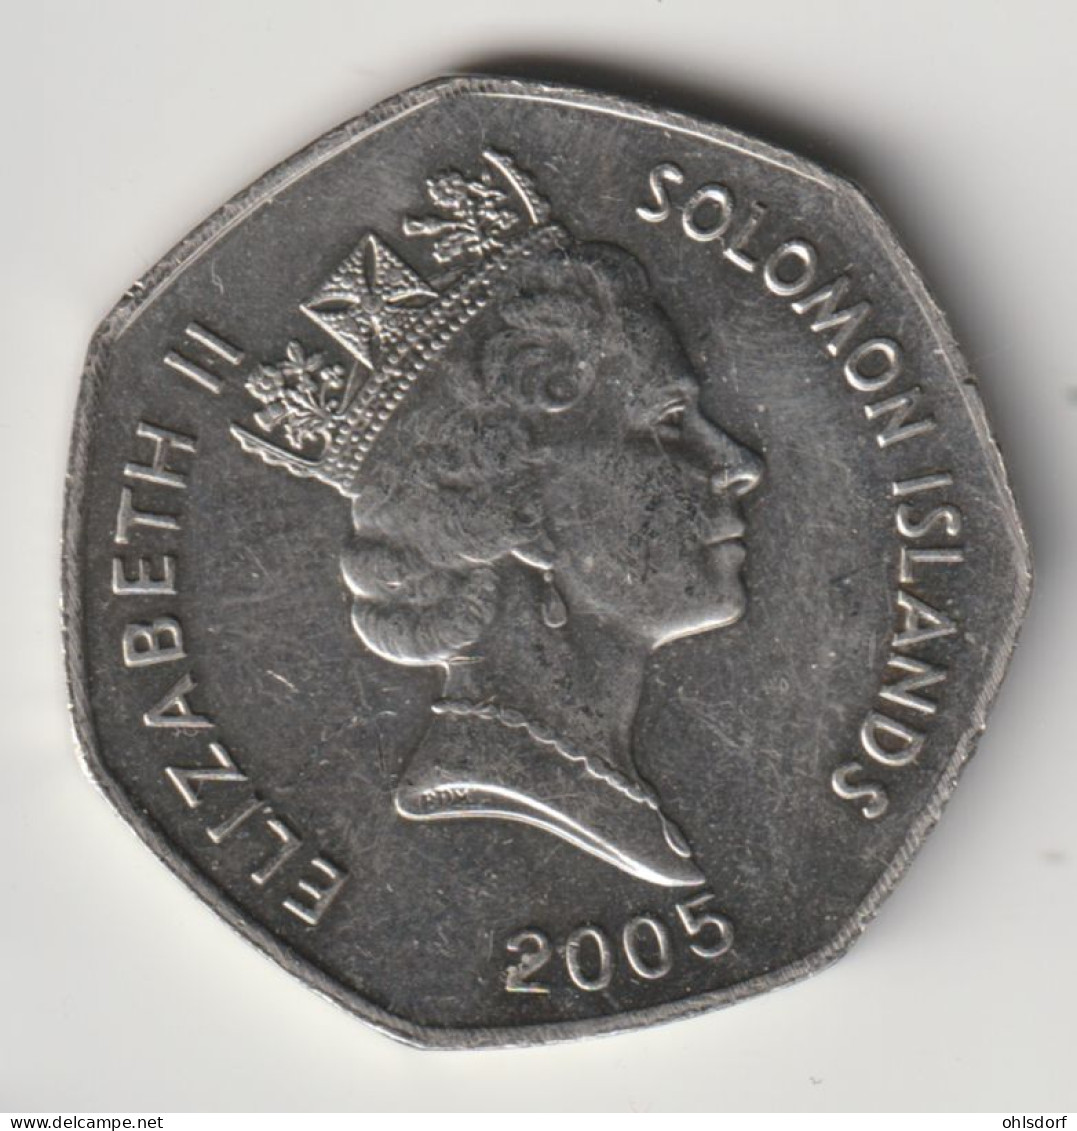 SOLOMON ISLANDS 2005: 1 Dollar, KM 72 - Solomon Islands